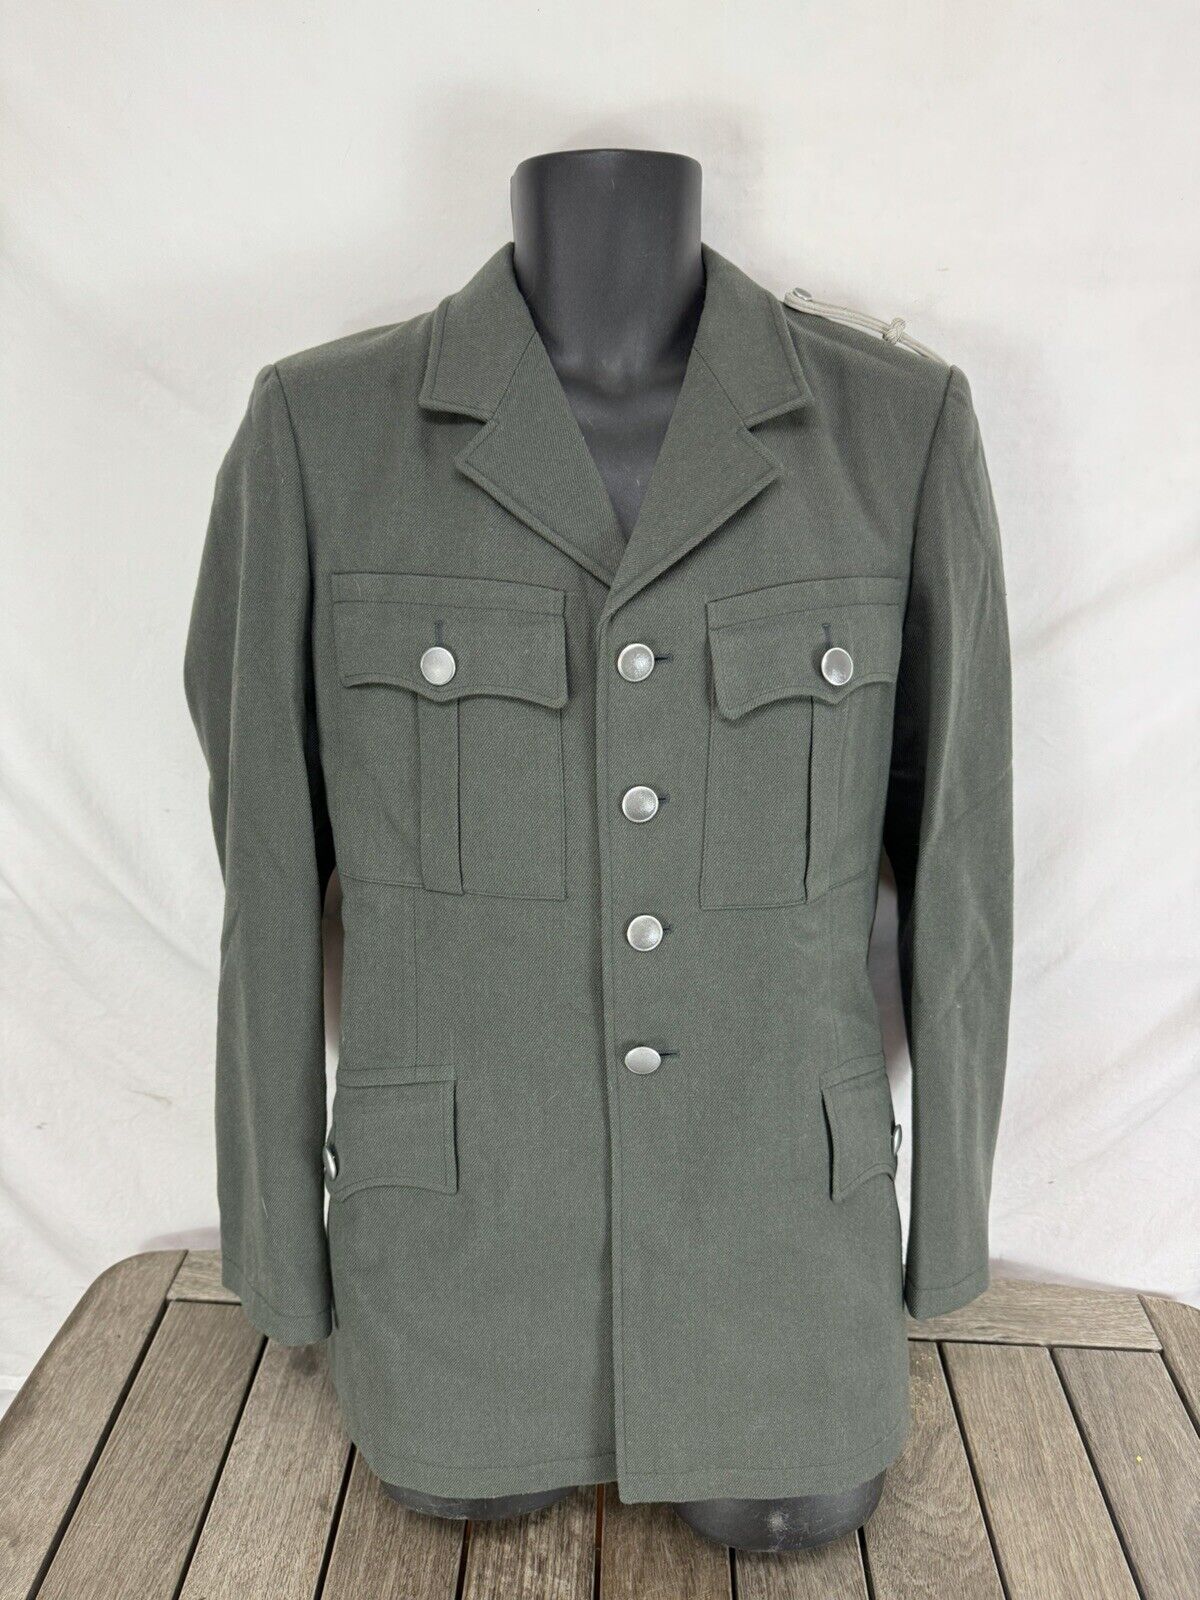 Austrian Army Dress Coat size chest 37